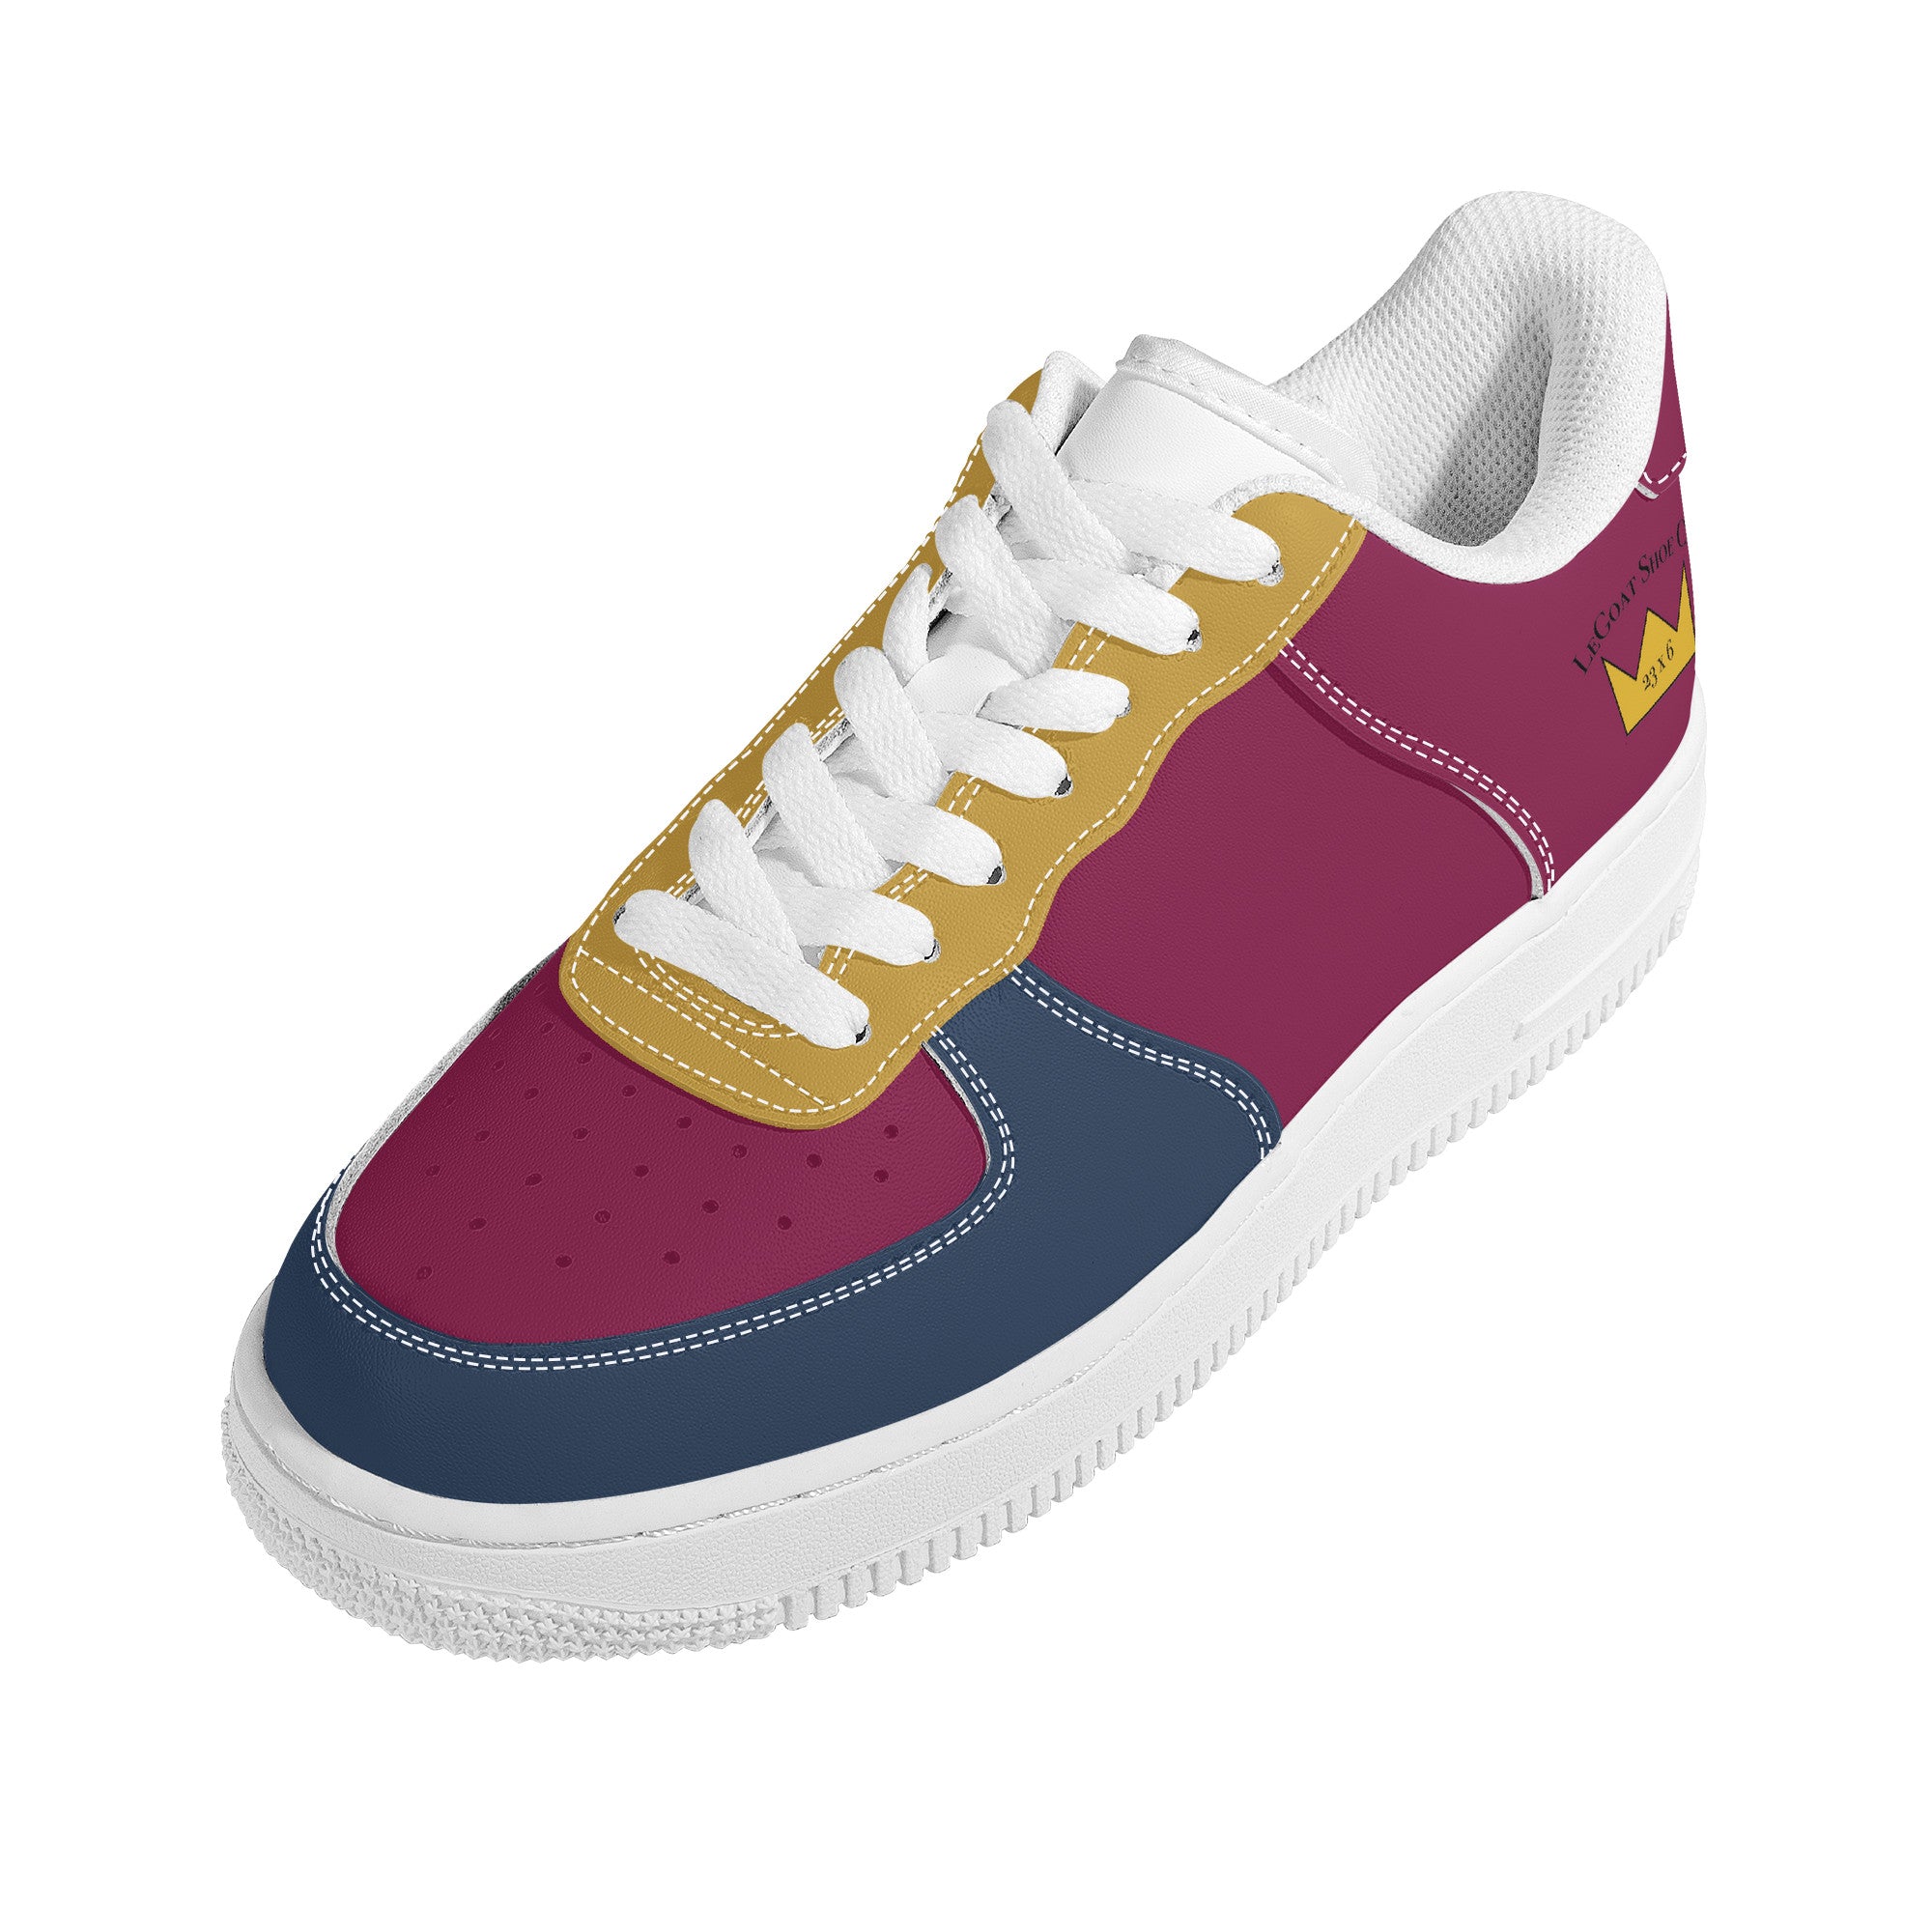 LeGoat shoes by Parker N | Low Top Customized | Shoe Zero